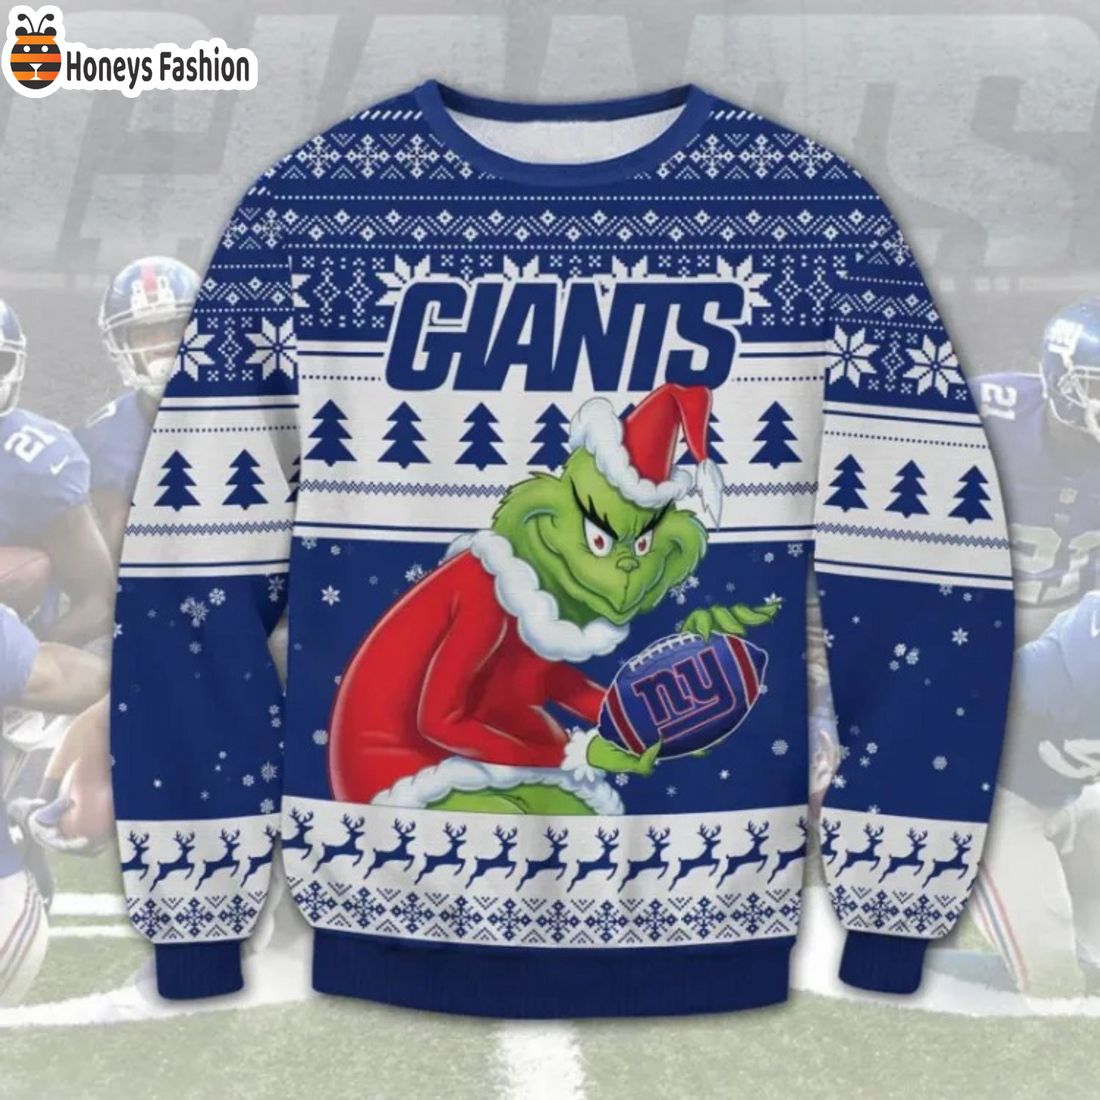 New York Giants Grinch Ugly Christmas Sweater